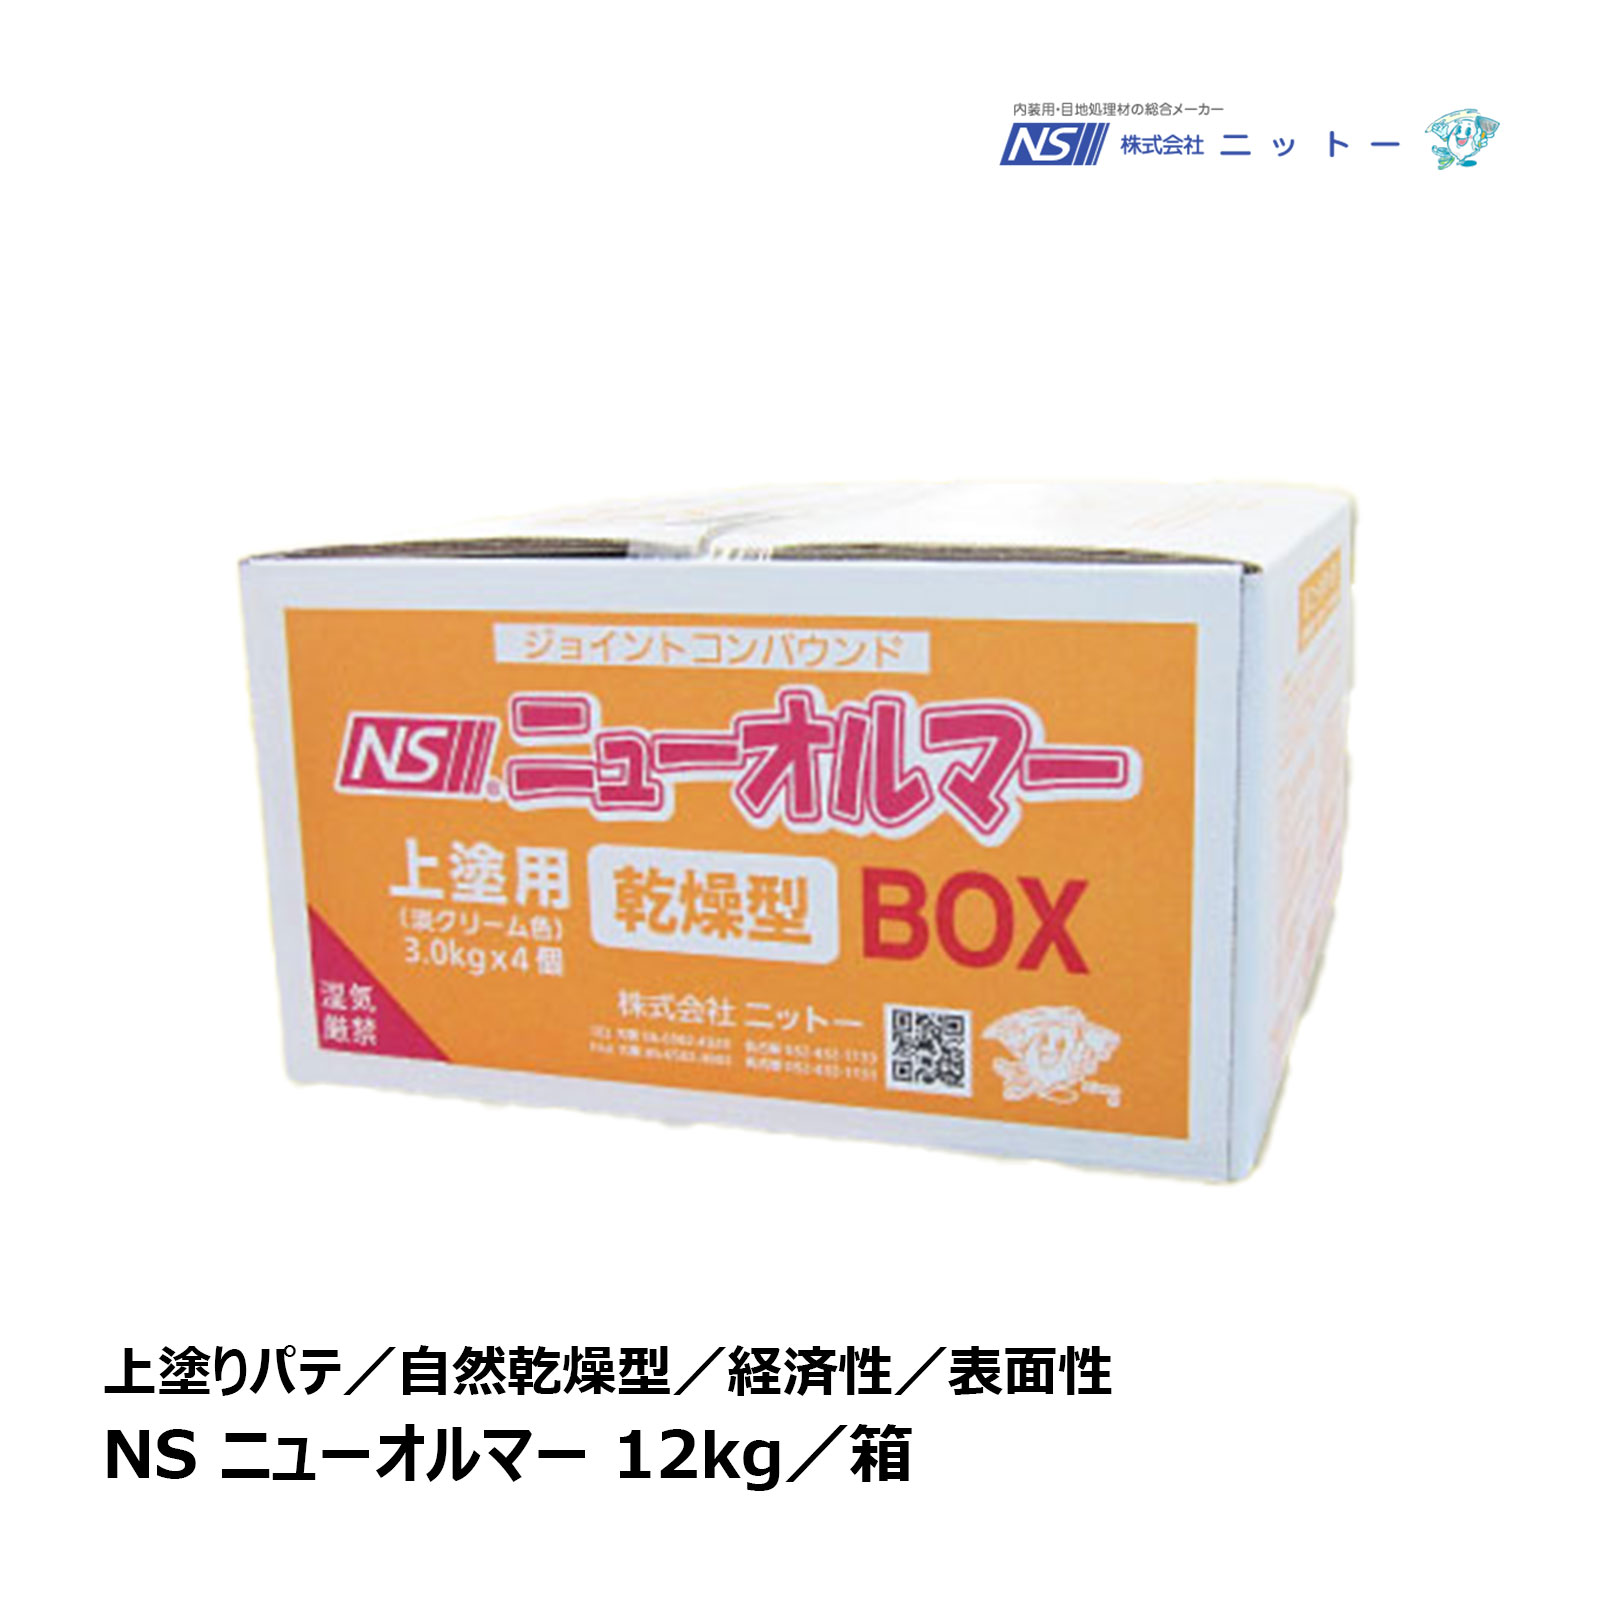 NITTO ニットー 上塗用 NS ニューオルマー 12kg/箱(3kg×4袋) N020054｜補修・接着剤 パテ製品